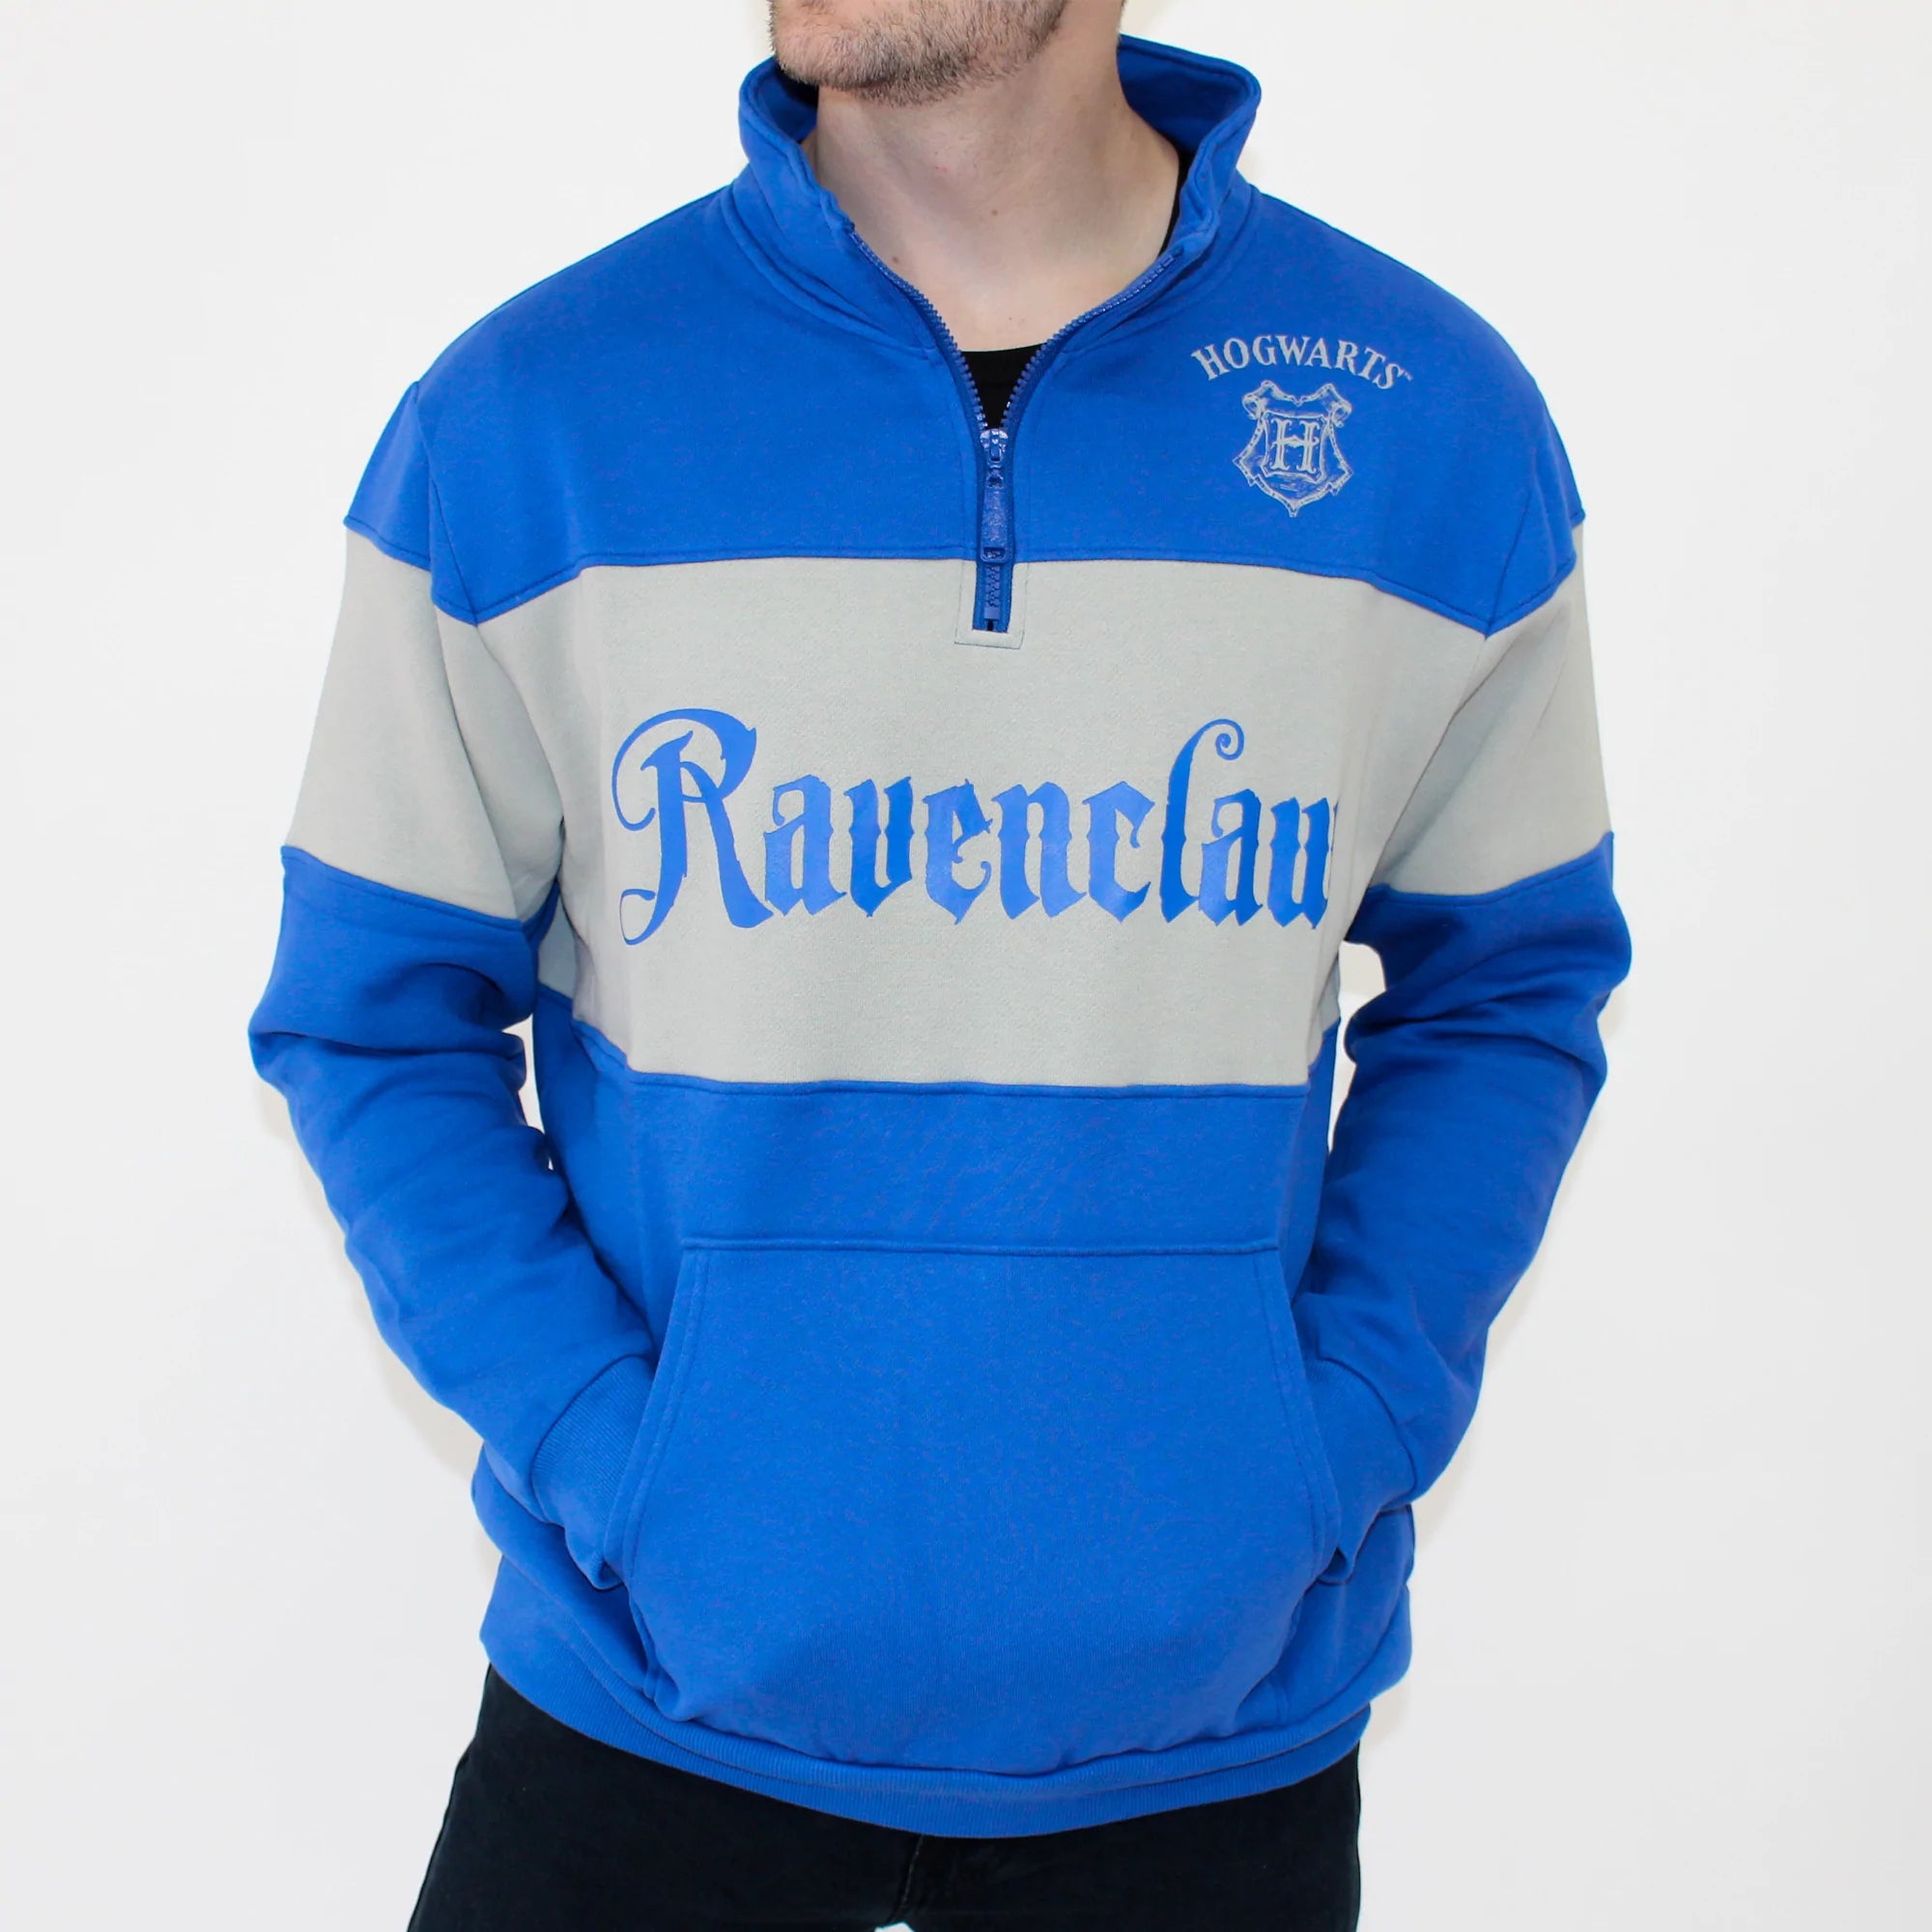 Cakeworthy Harry Potter Ravenclaw 1/4 Zip Sweater